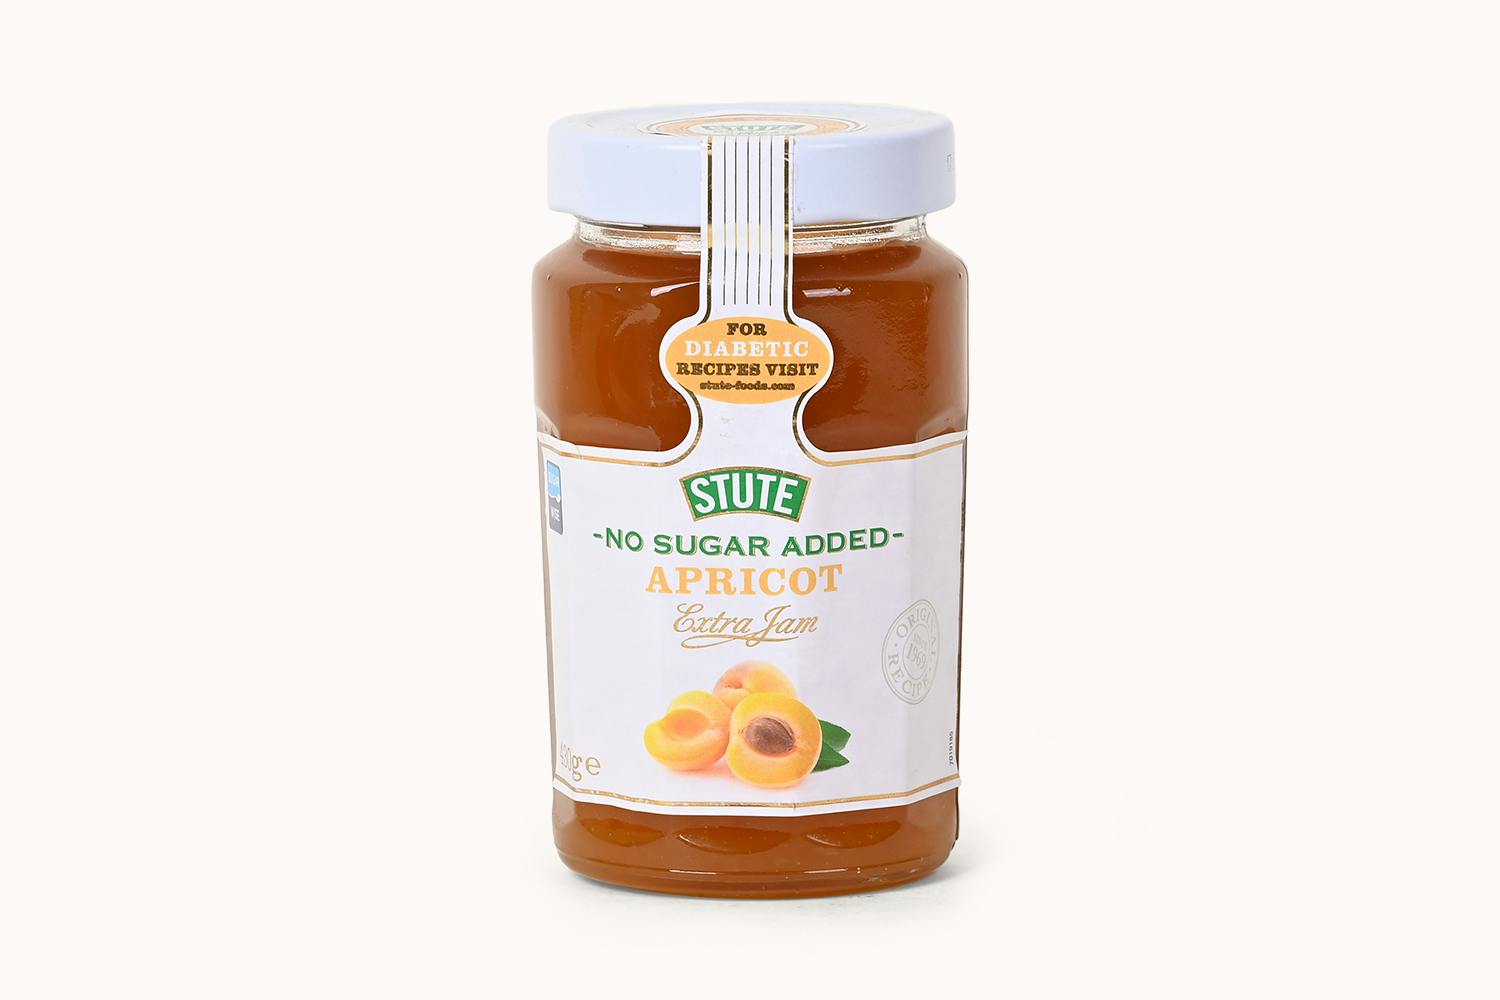 Stute Apricot Jam - No Sugar Added